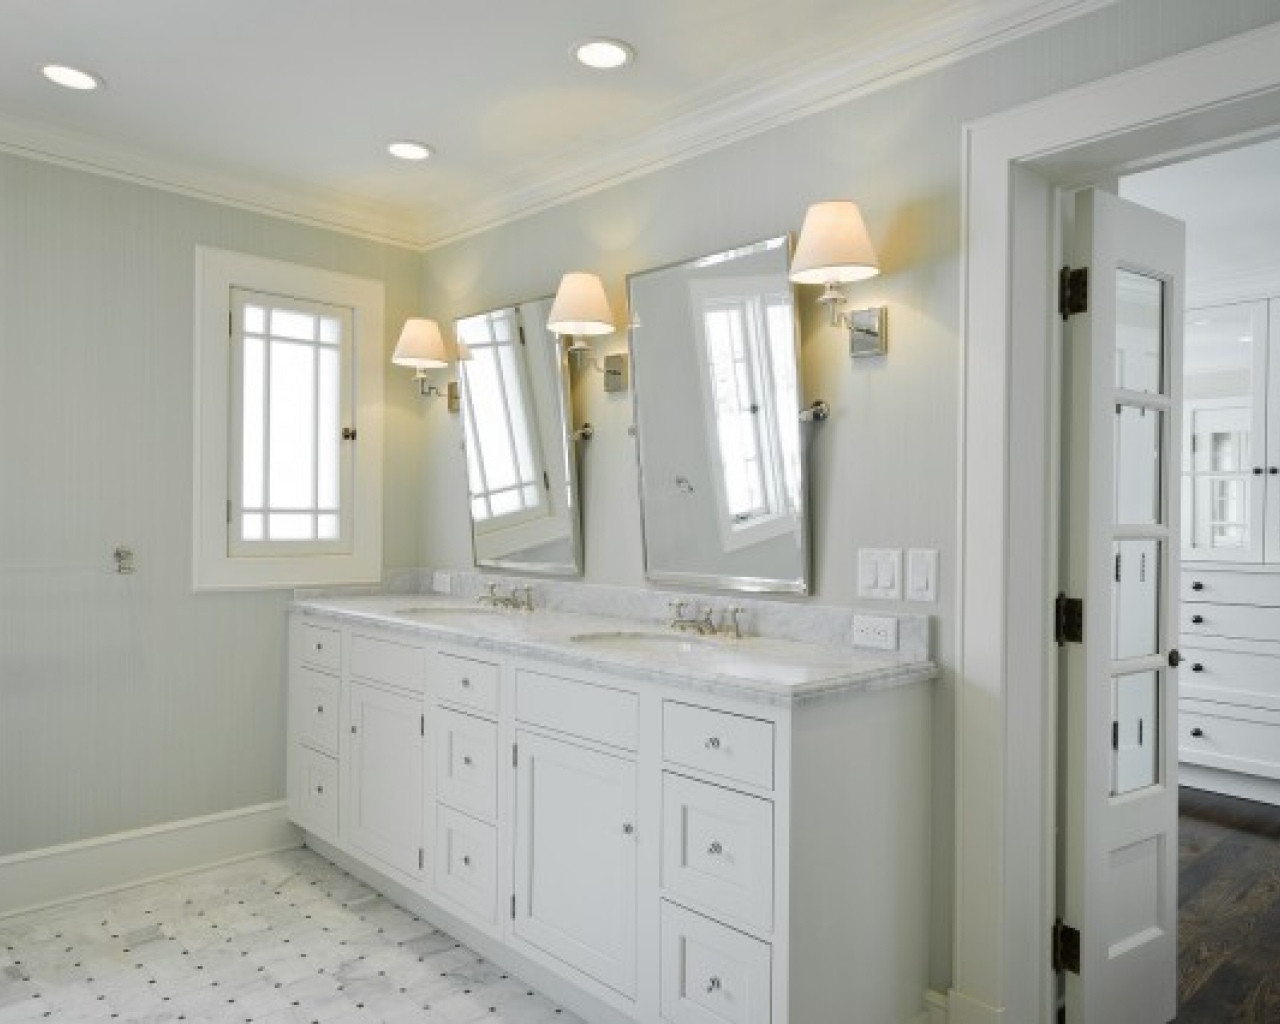 Bathroom Vanity Mirror Cabinet
 Bathroom Vanity Mirrors for Aesthetics and Functions